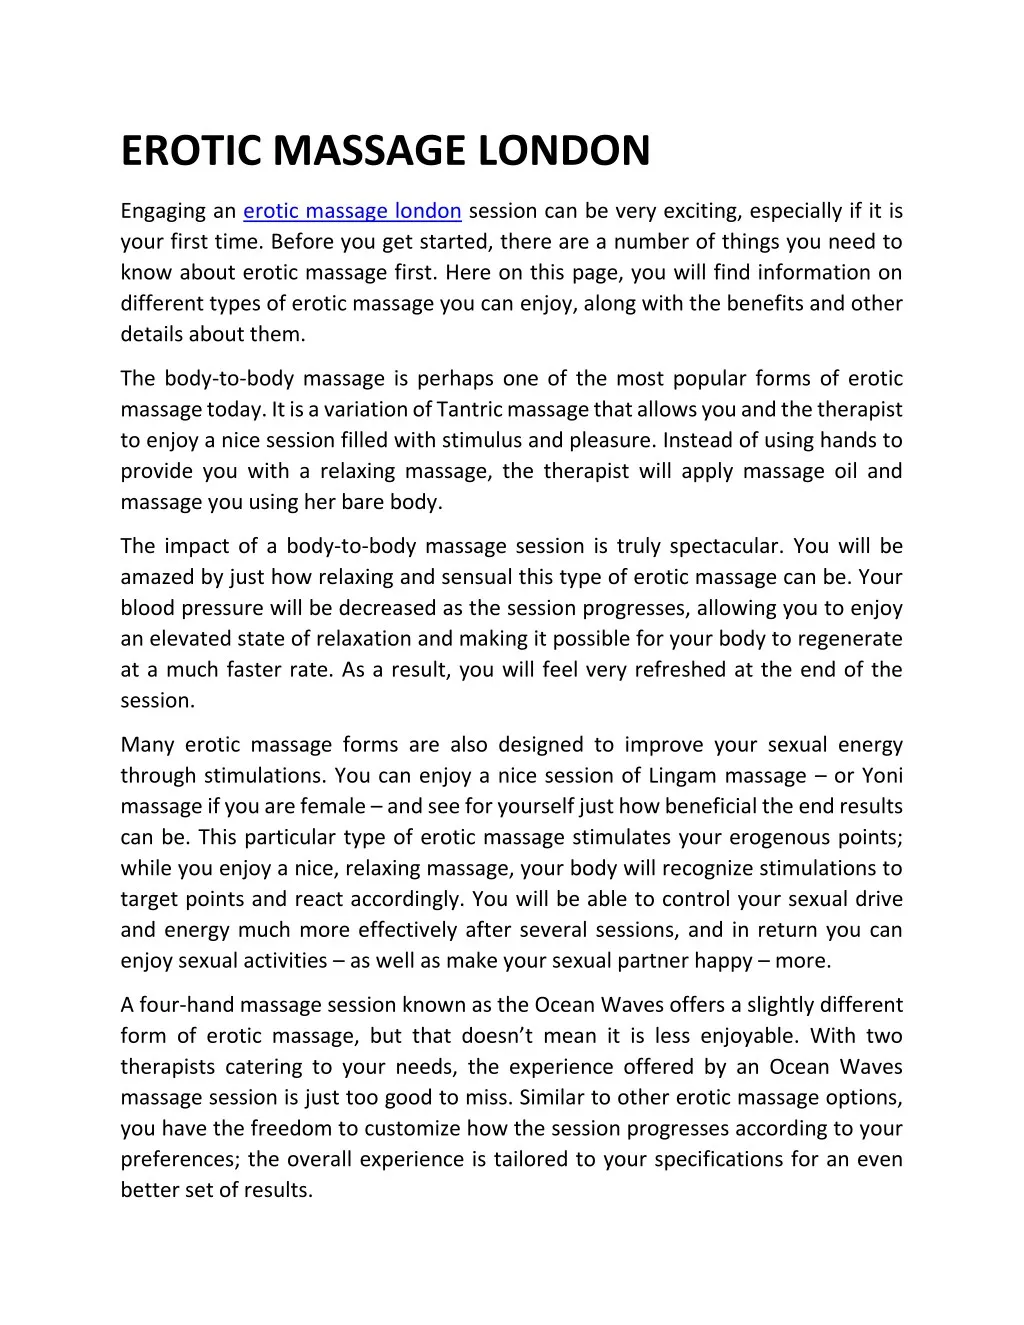 Ppt Erotic Massage London Powerpoint Presentation Free Download Id 7722110